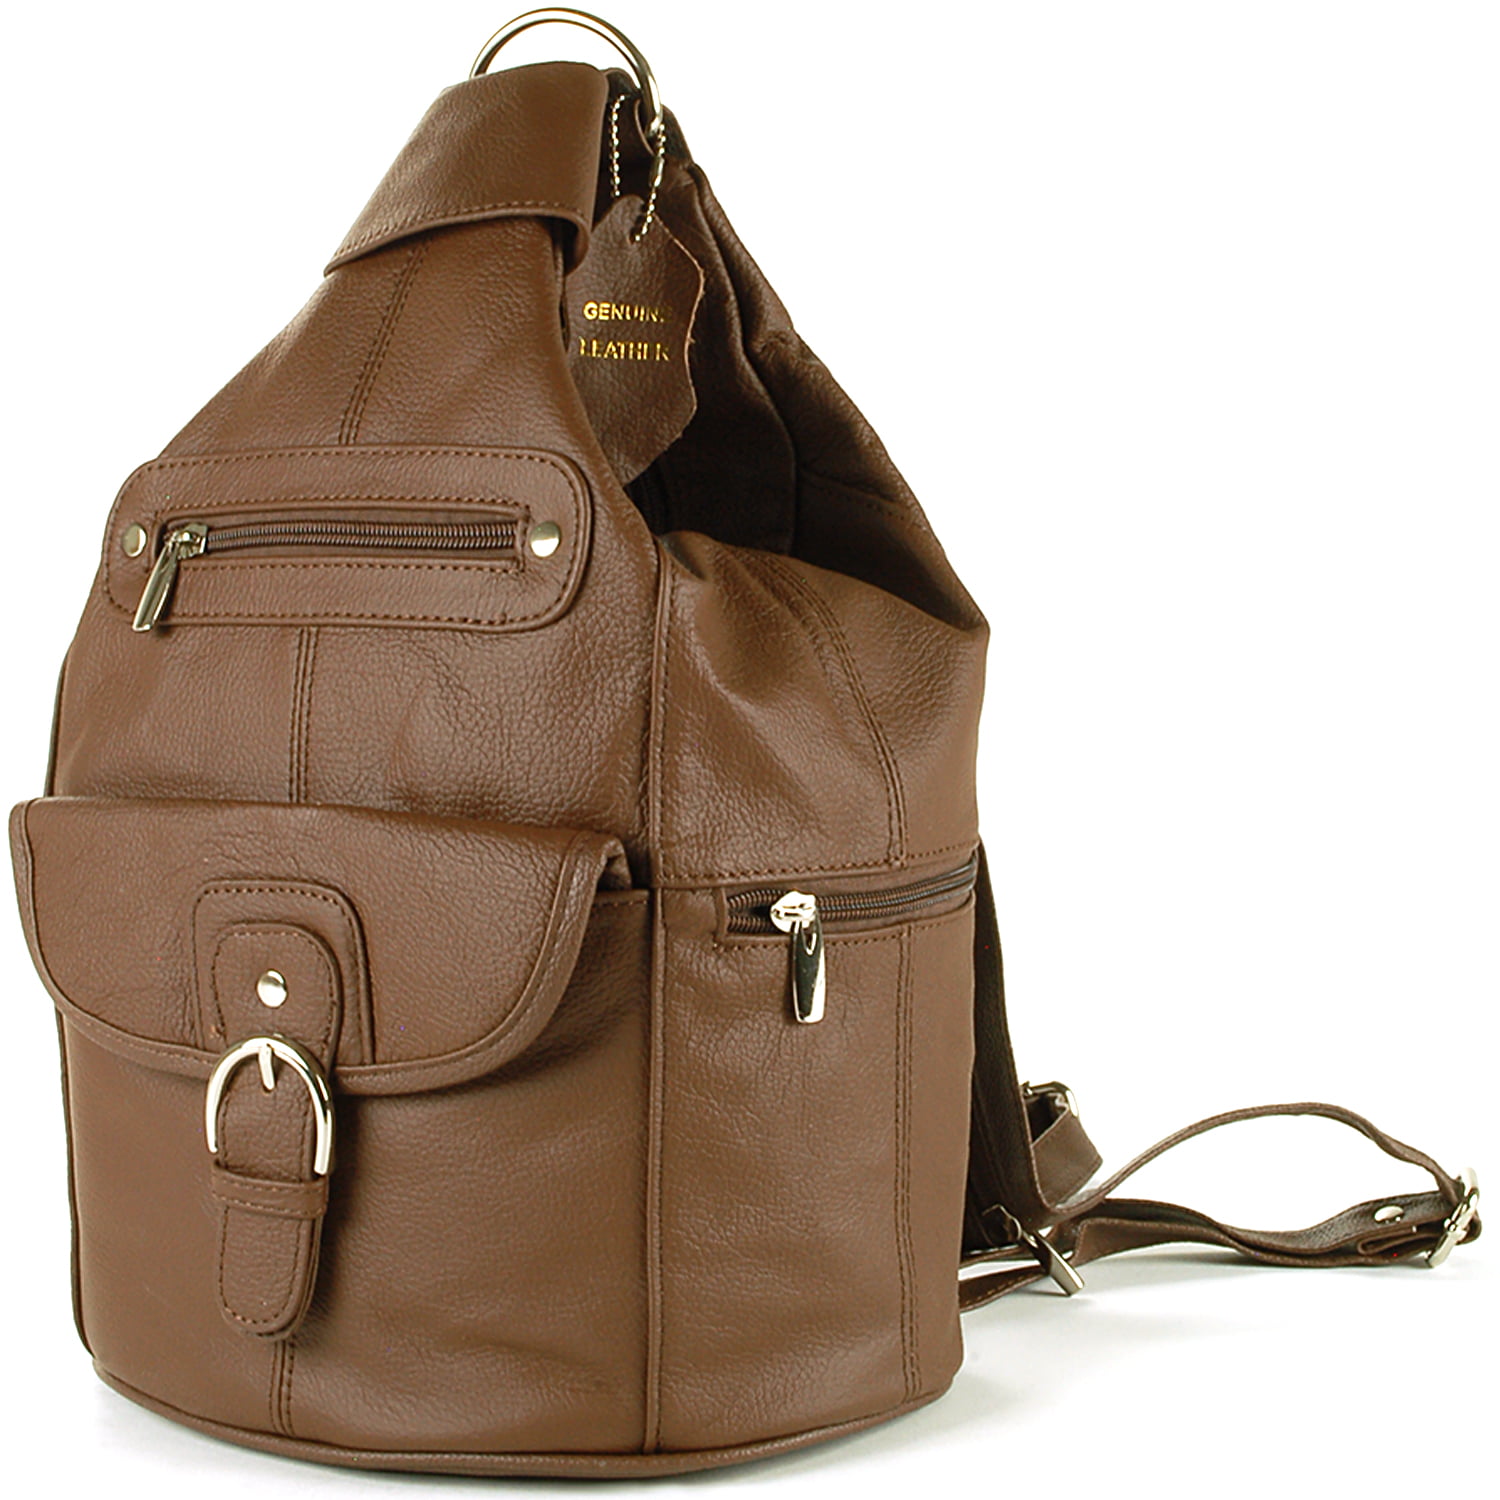 AOD - Womens Leather Backpack Purse Sling Shoulder Bag Handbag 3 in 1 Convertible New - 0